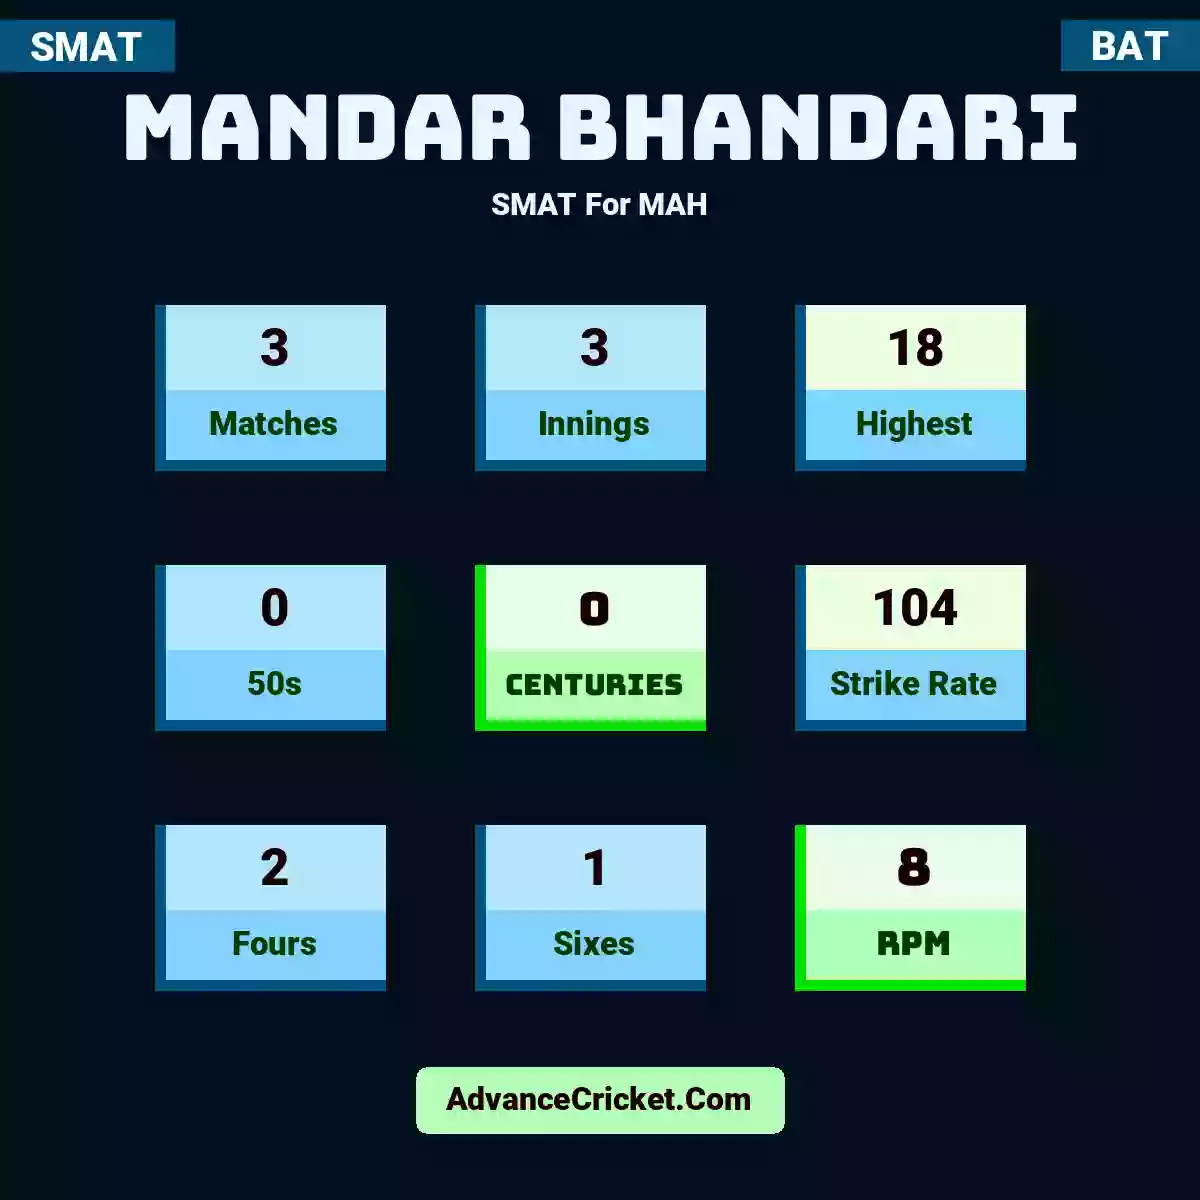 Mandar Bhandari SMAT  For MAH, Mandar Bhandari played 3 matches, scored 18 runs as highest, 0 half-centuries, and 0 centuries, with a strike rate of 104. M.Bhandari hit 2 fours and 1 sixes, with an RPM of 8.